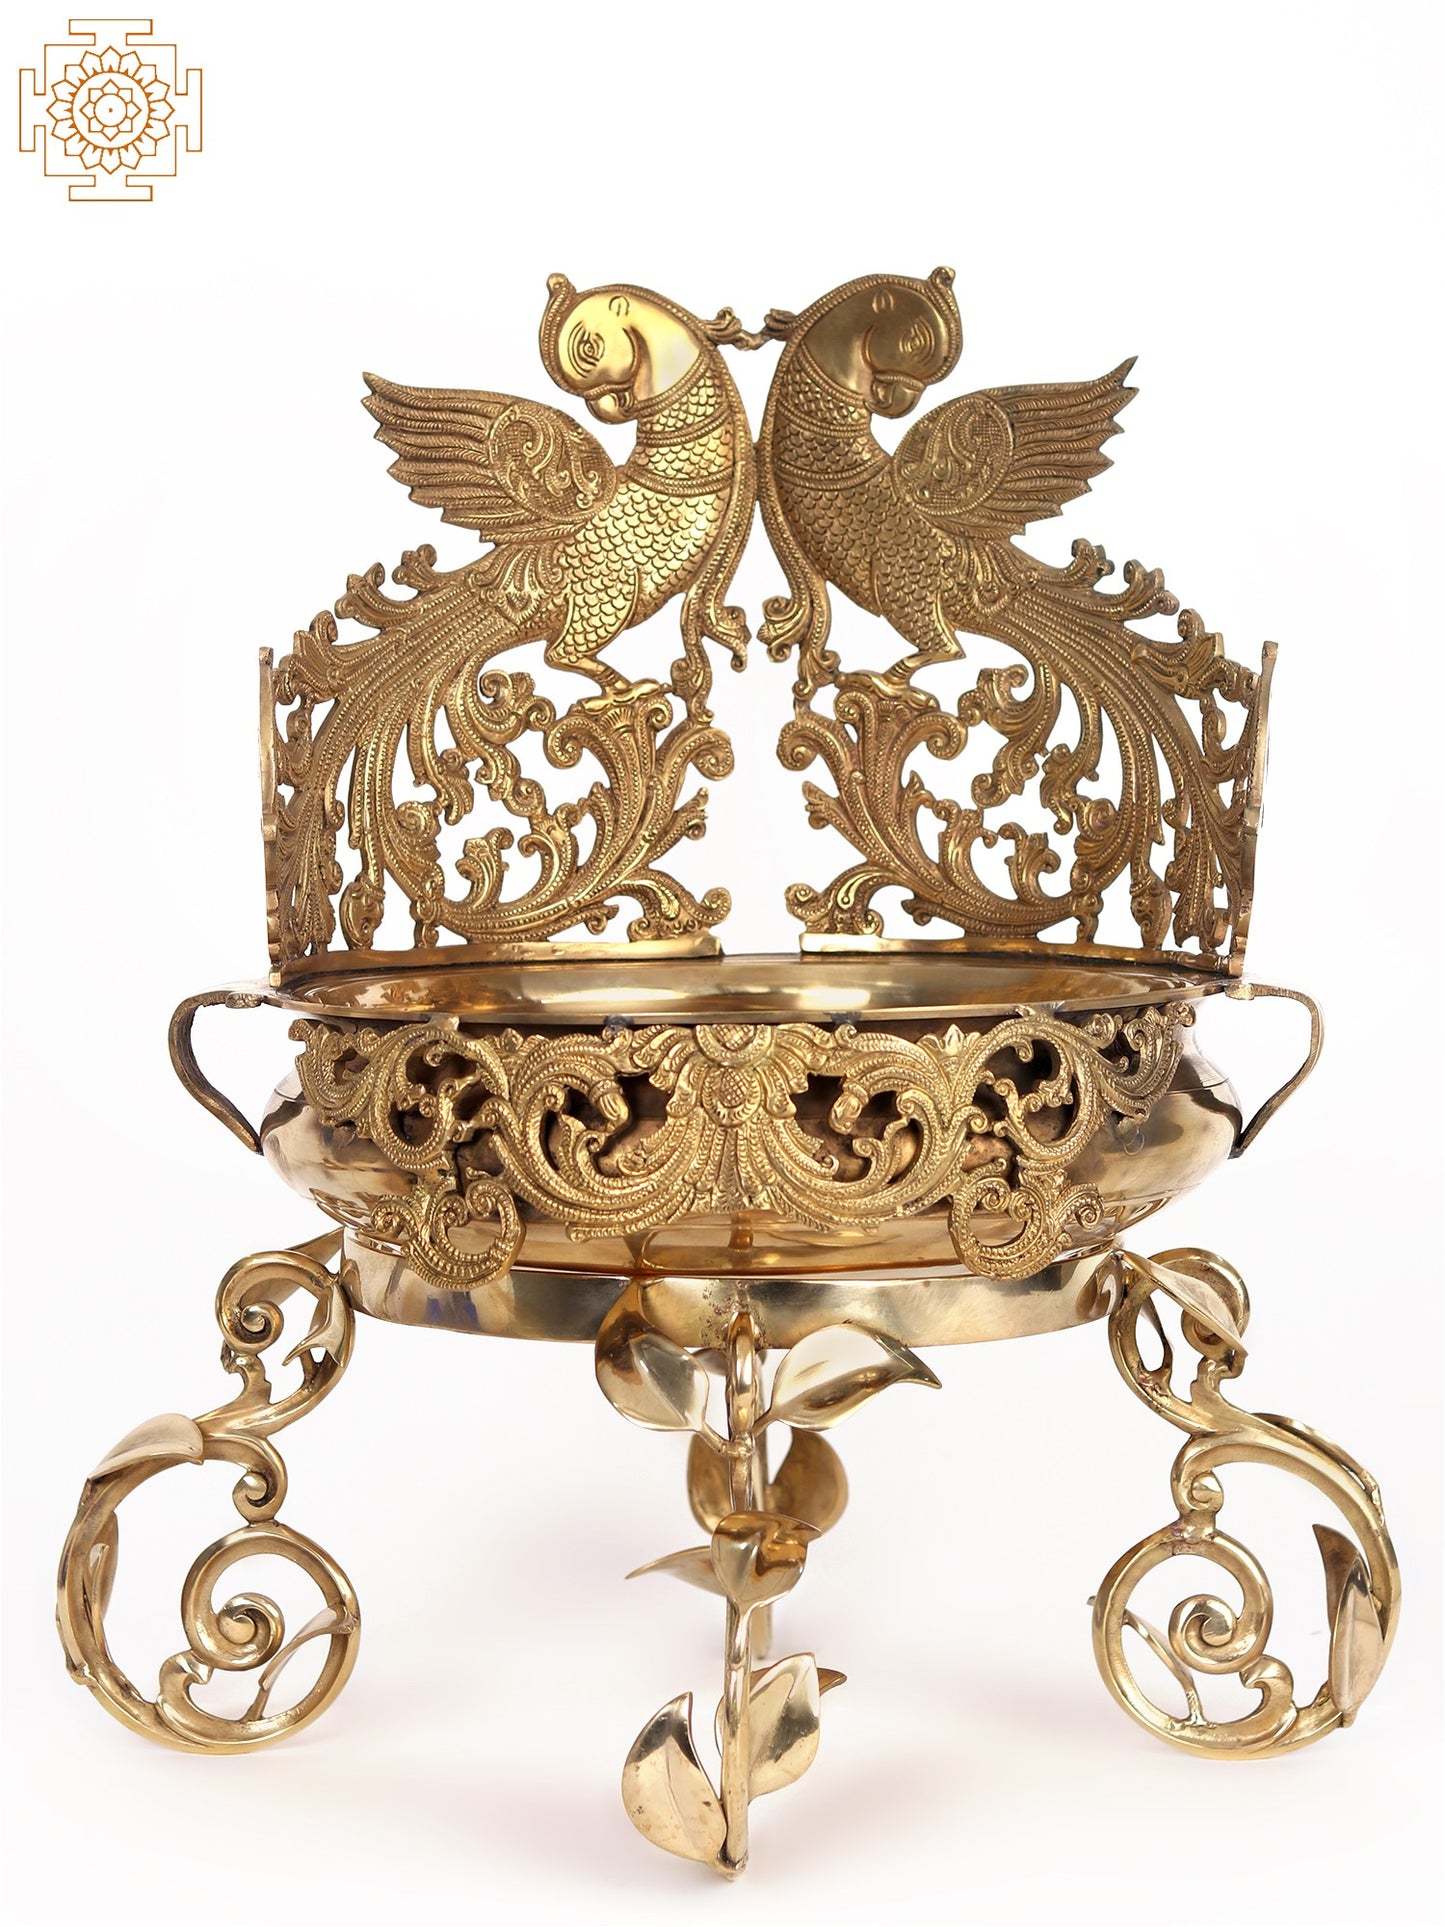 20" Brass Parrot Urli with Stand | Home Decor Showpiece